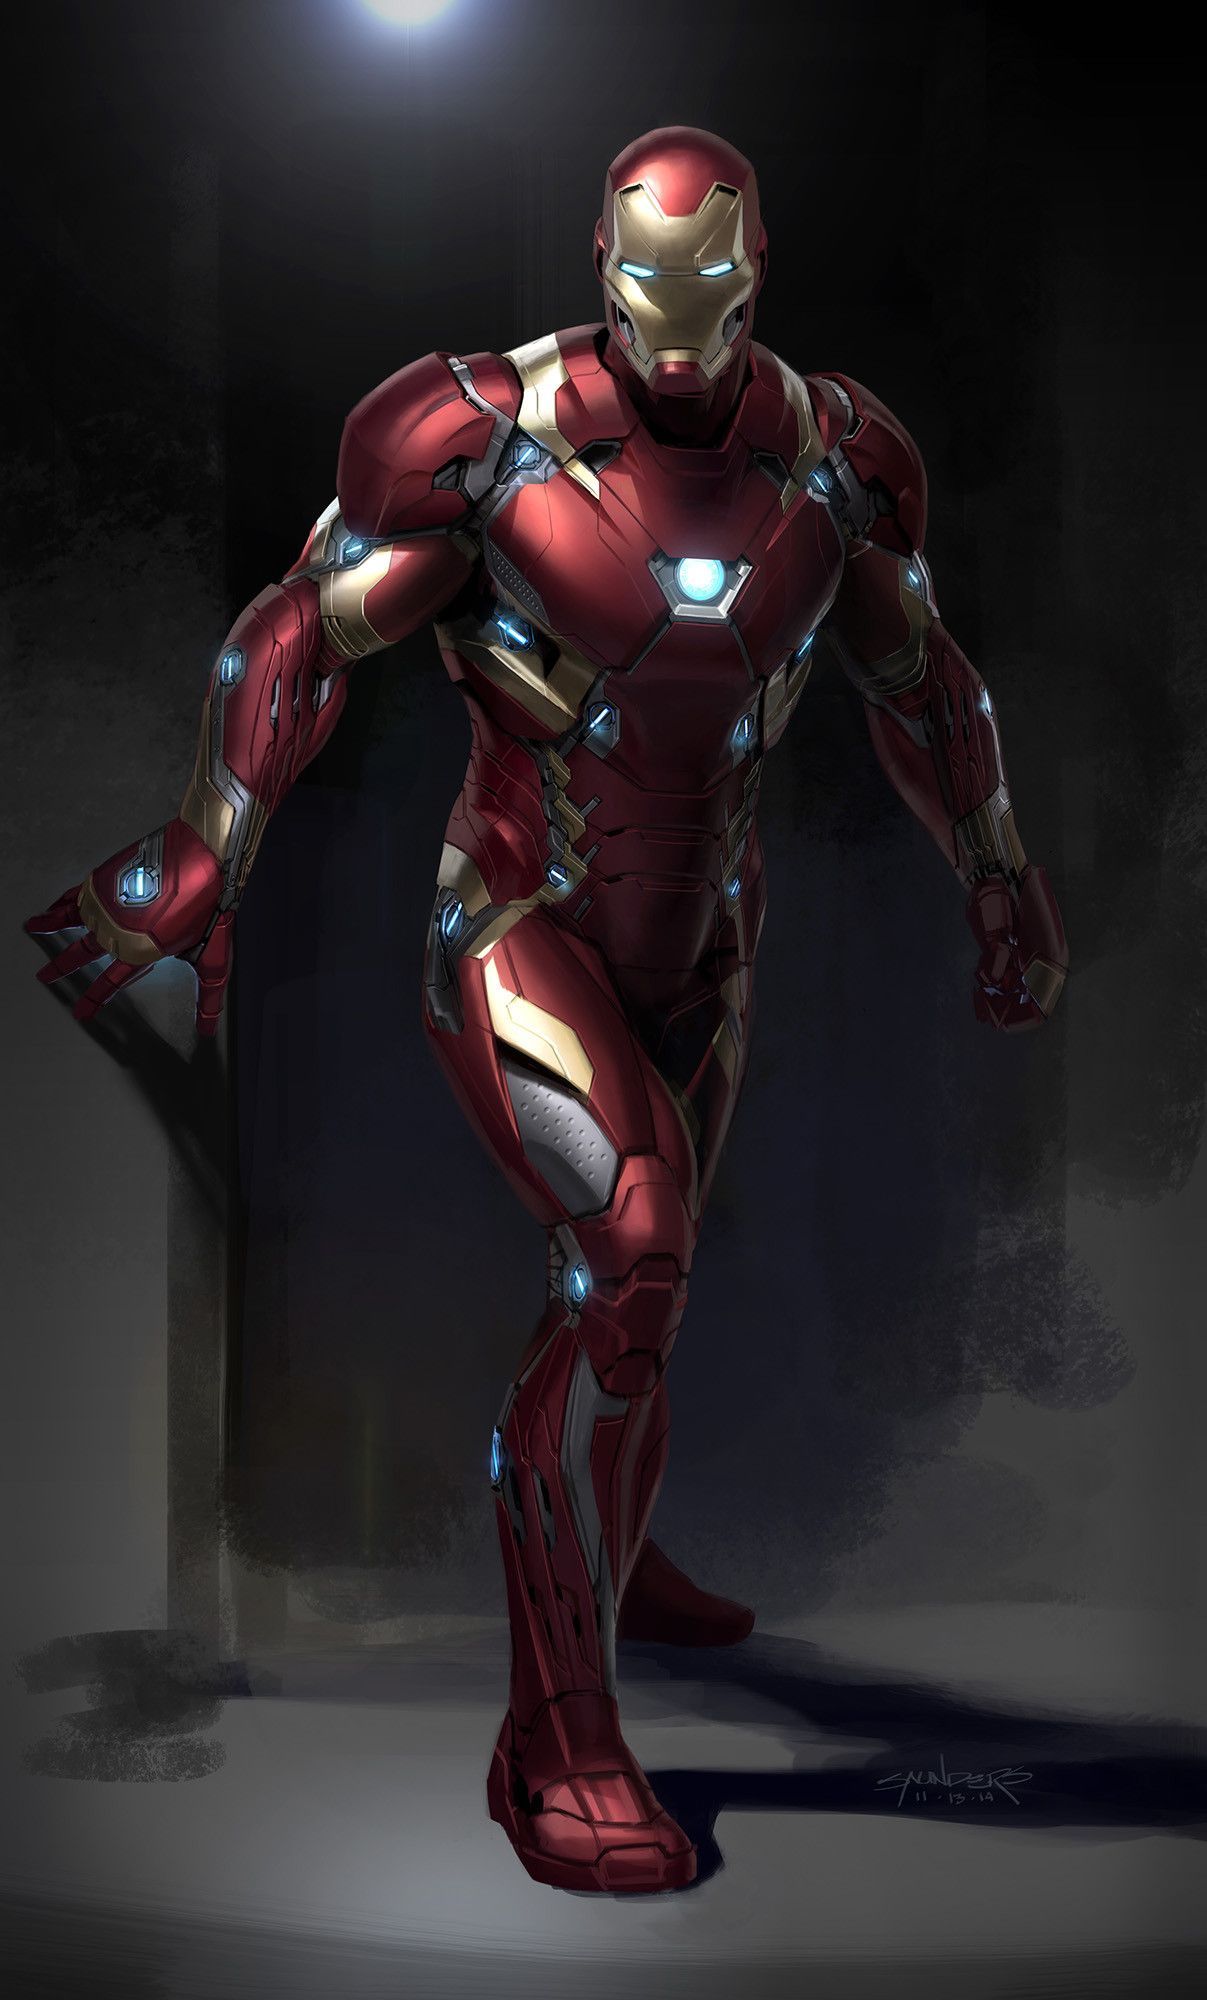 Iron Man Mk Phil Saunders. Marvel iron man, Iron man, Iron man wallpaper